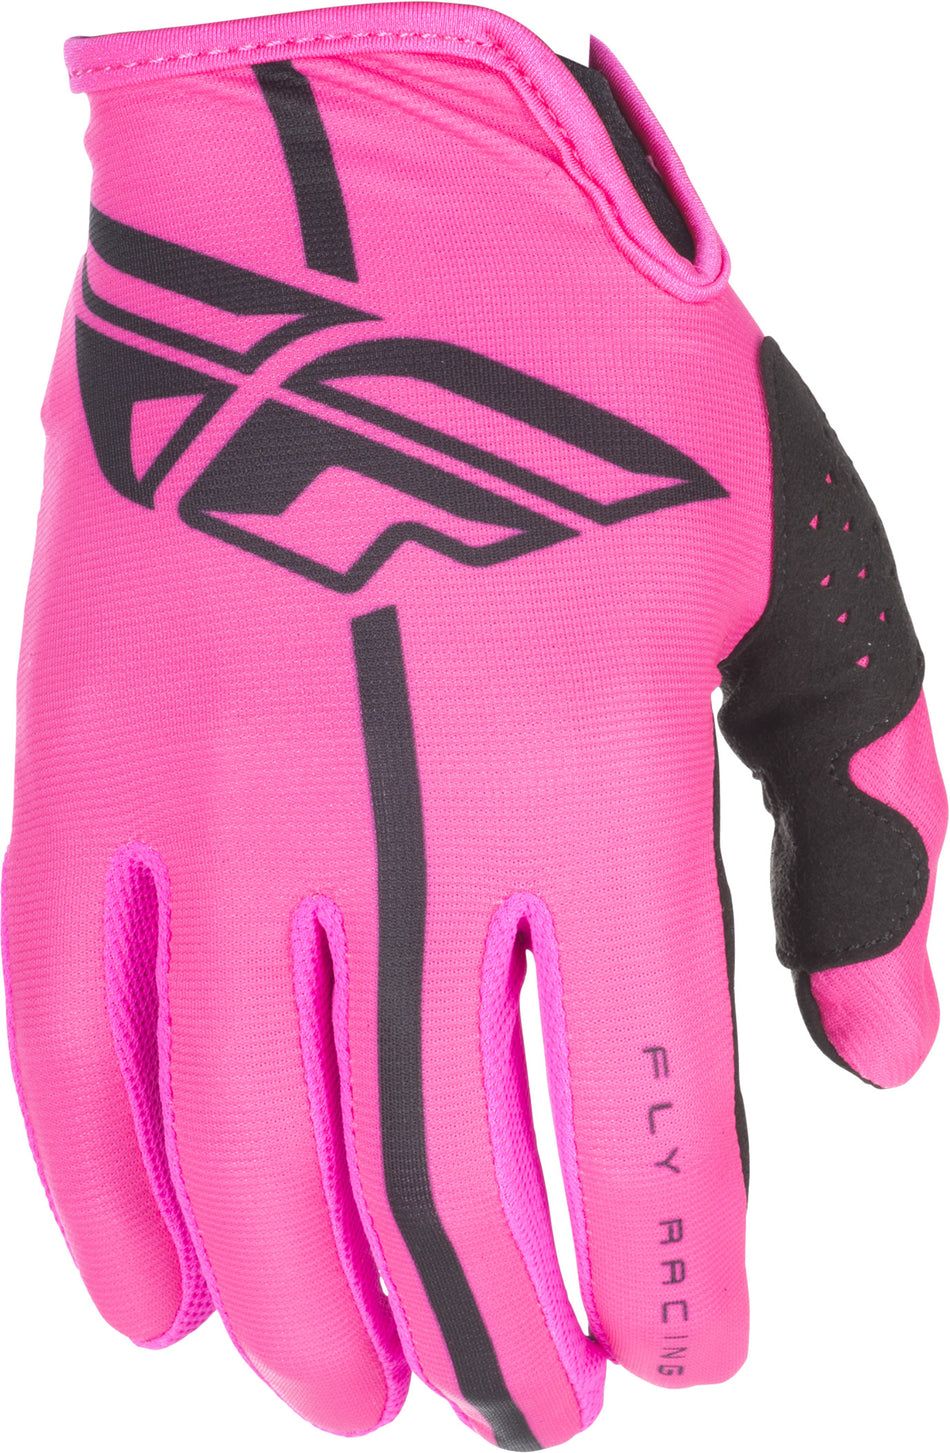 FLY RACING Lite Gloves Neon Pink/Black Sz 10 371-01710